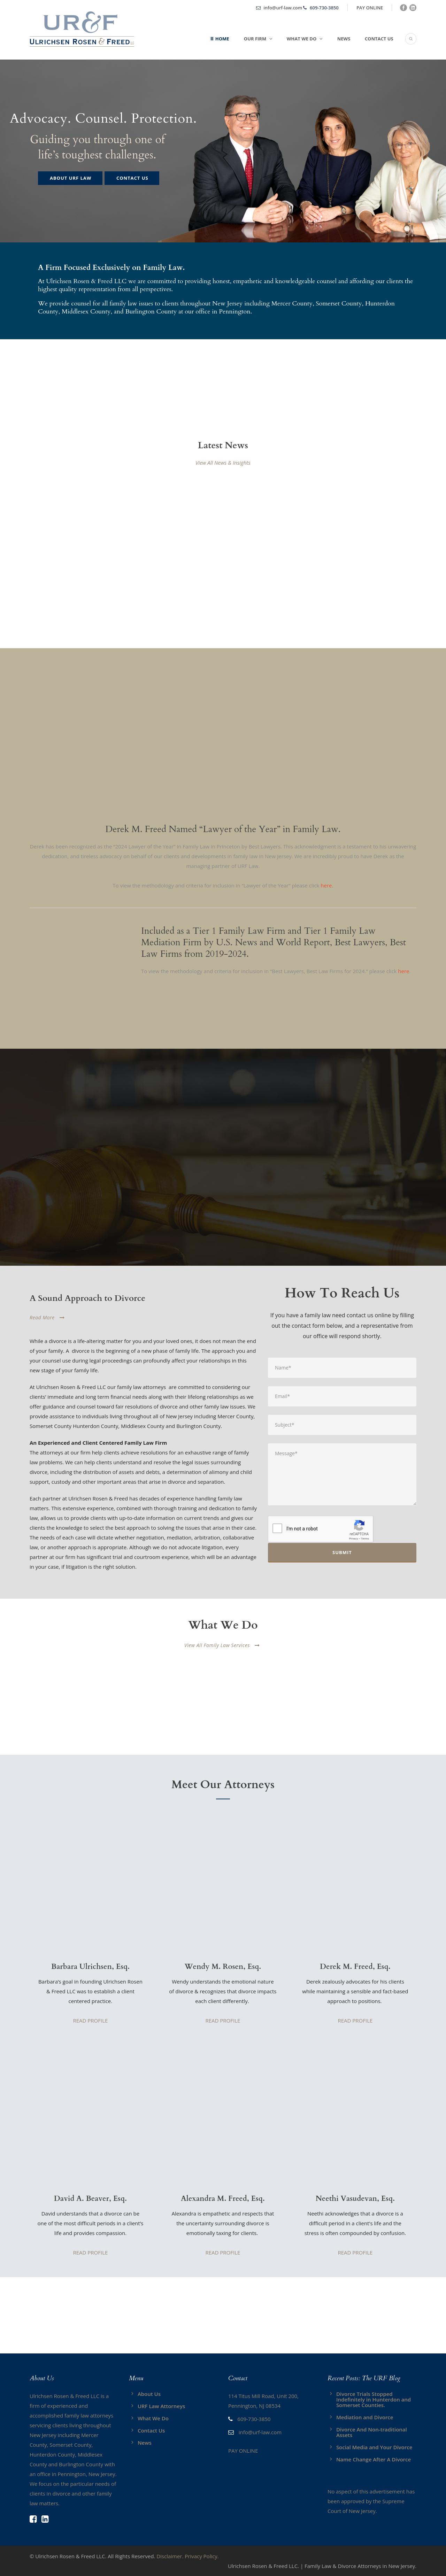 Ulrichsen Rosen & Freed LLC - Pennington NJ Lawyers